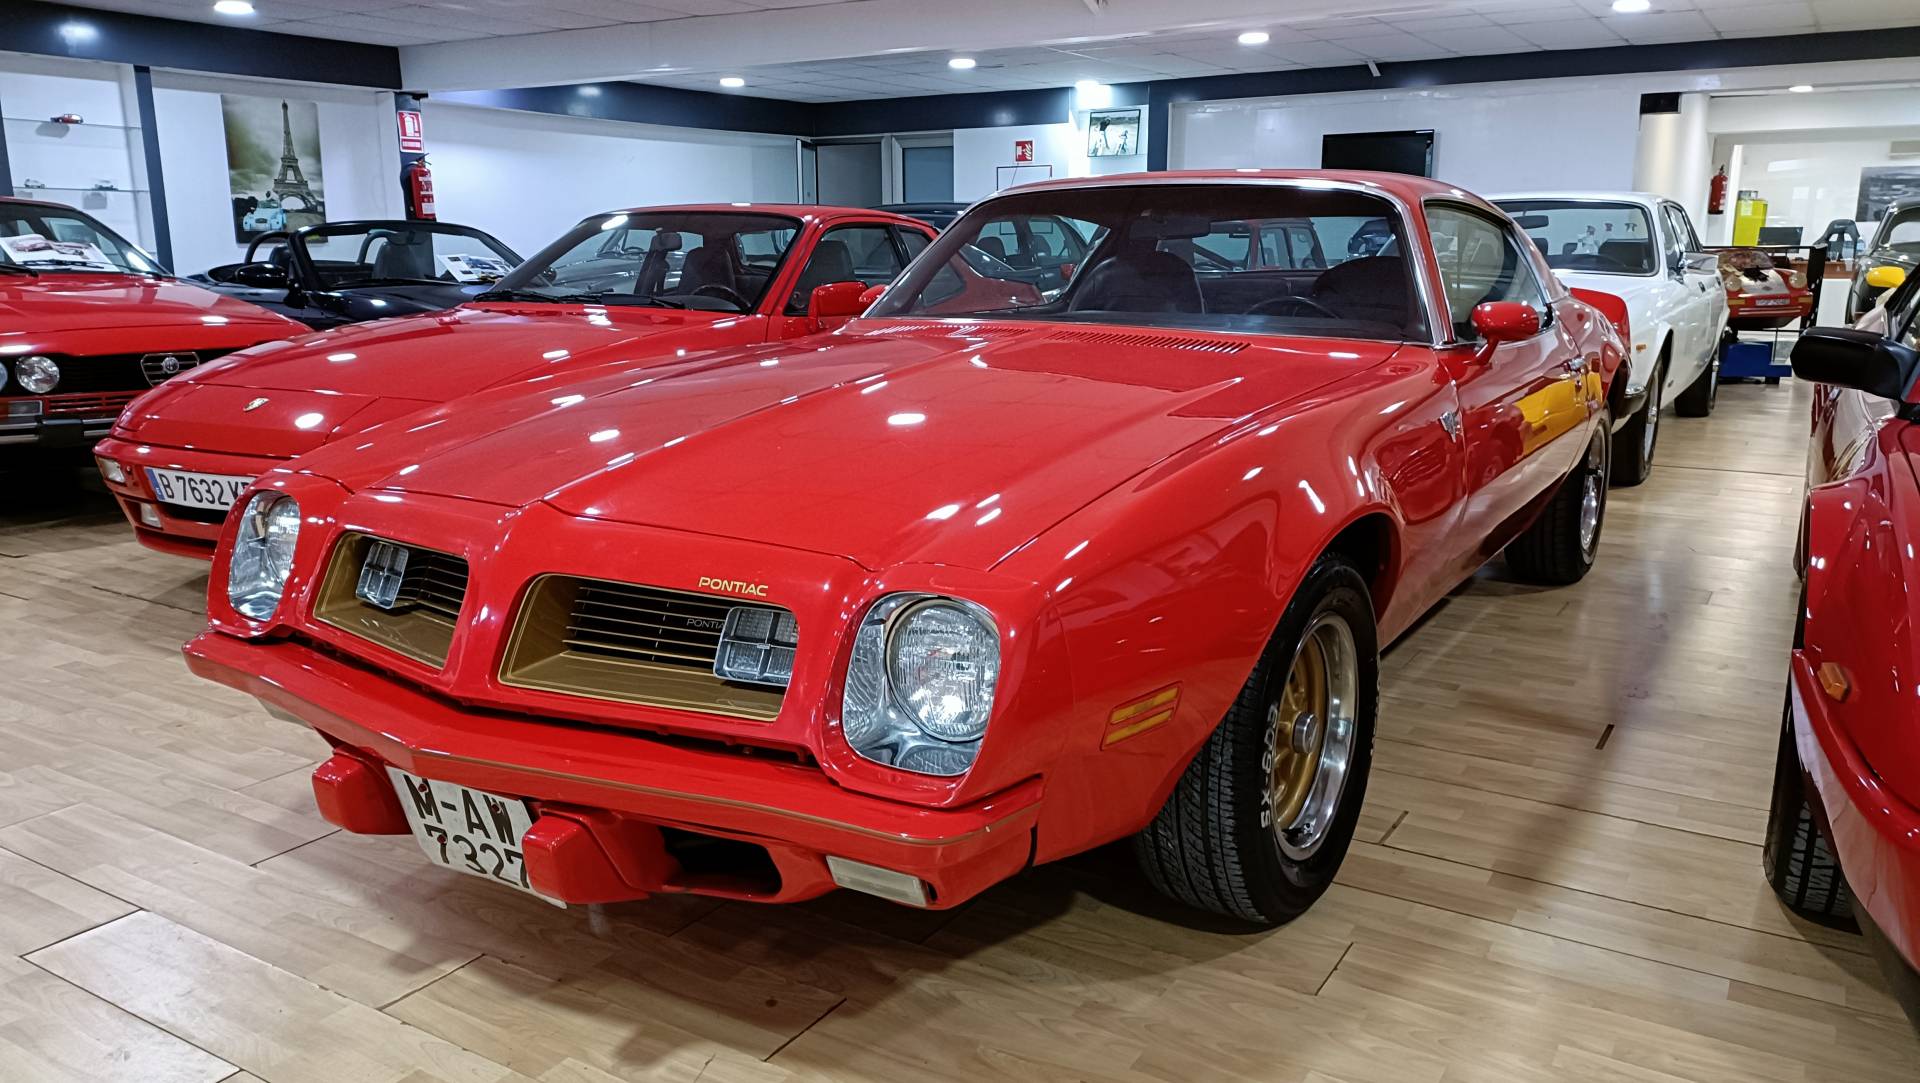 Pontiac Firebird Classic Cars for Sale - Classic Trader